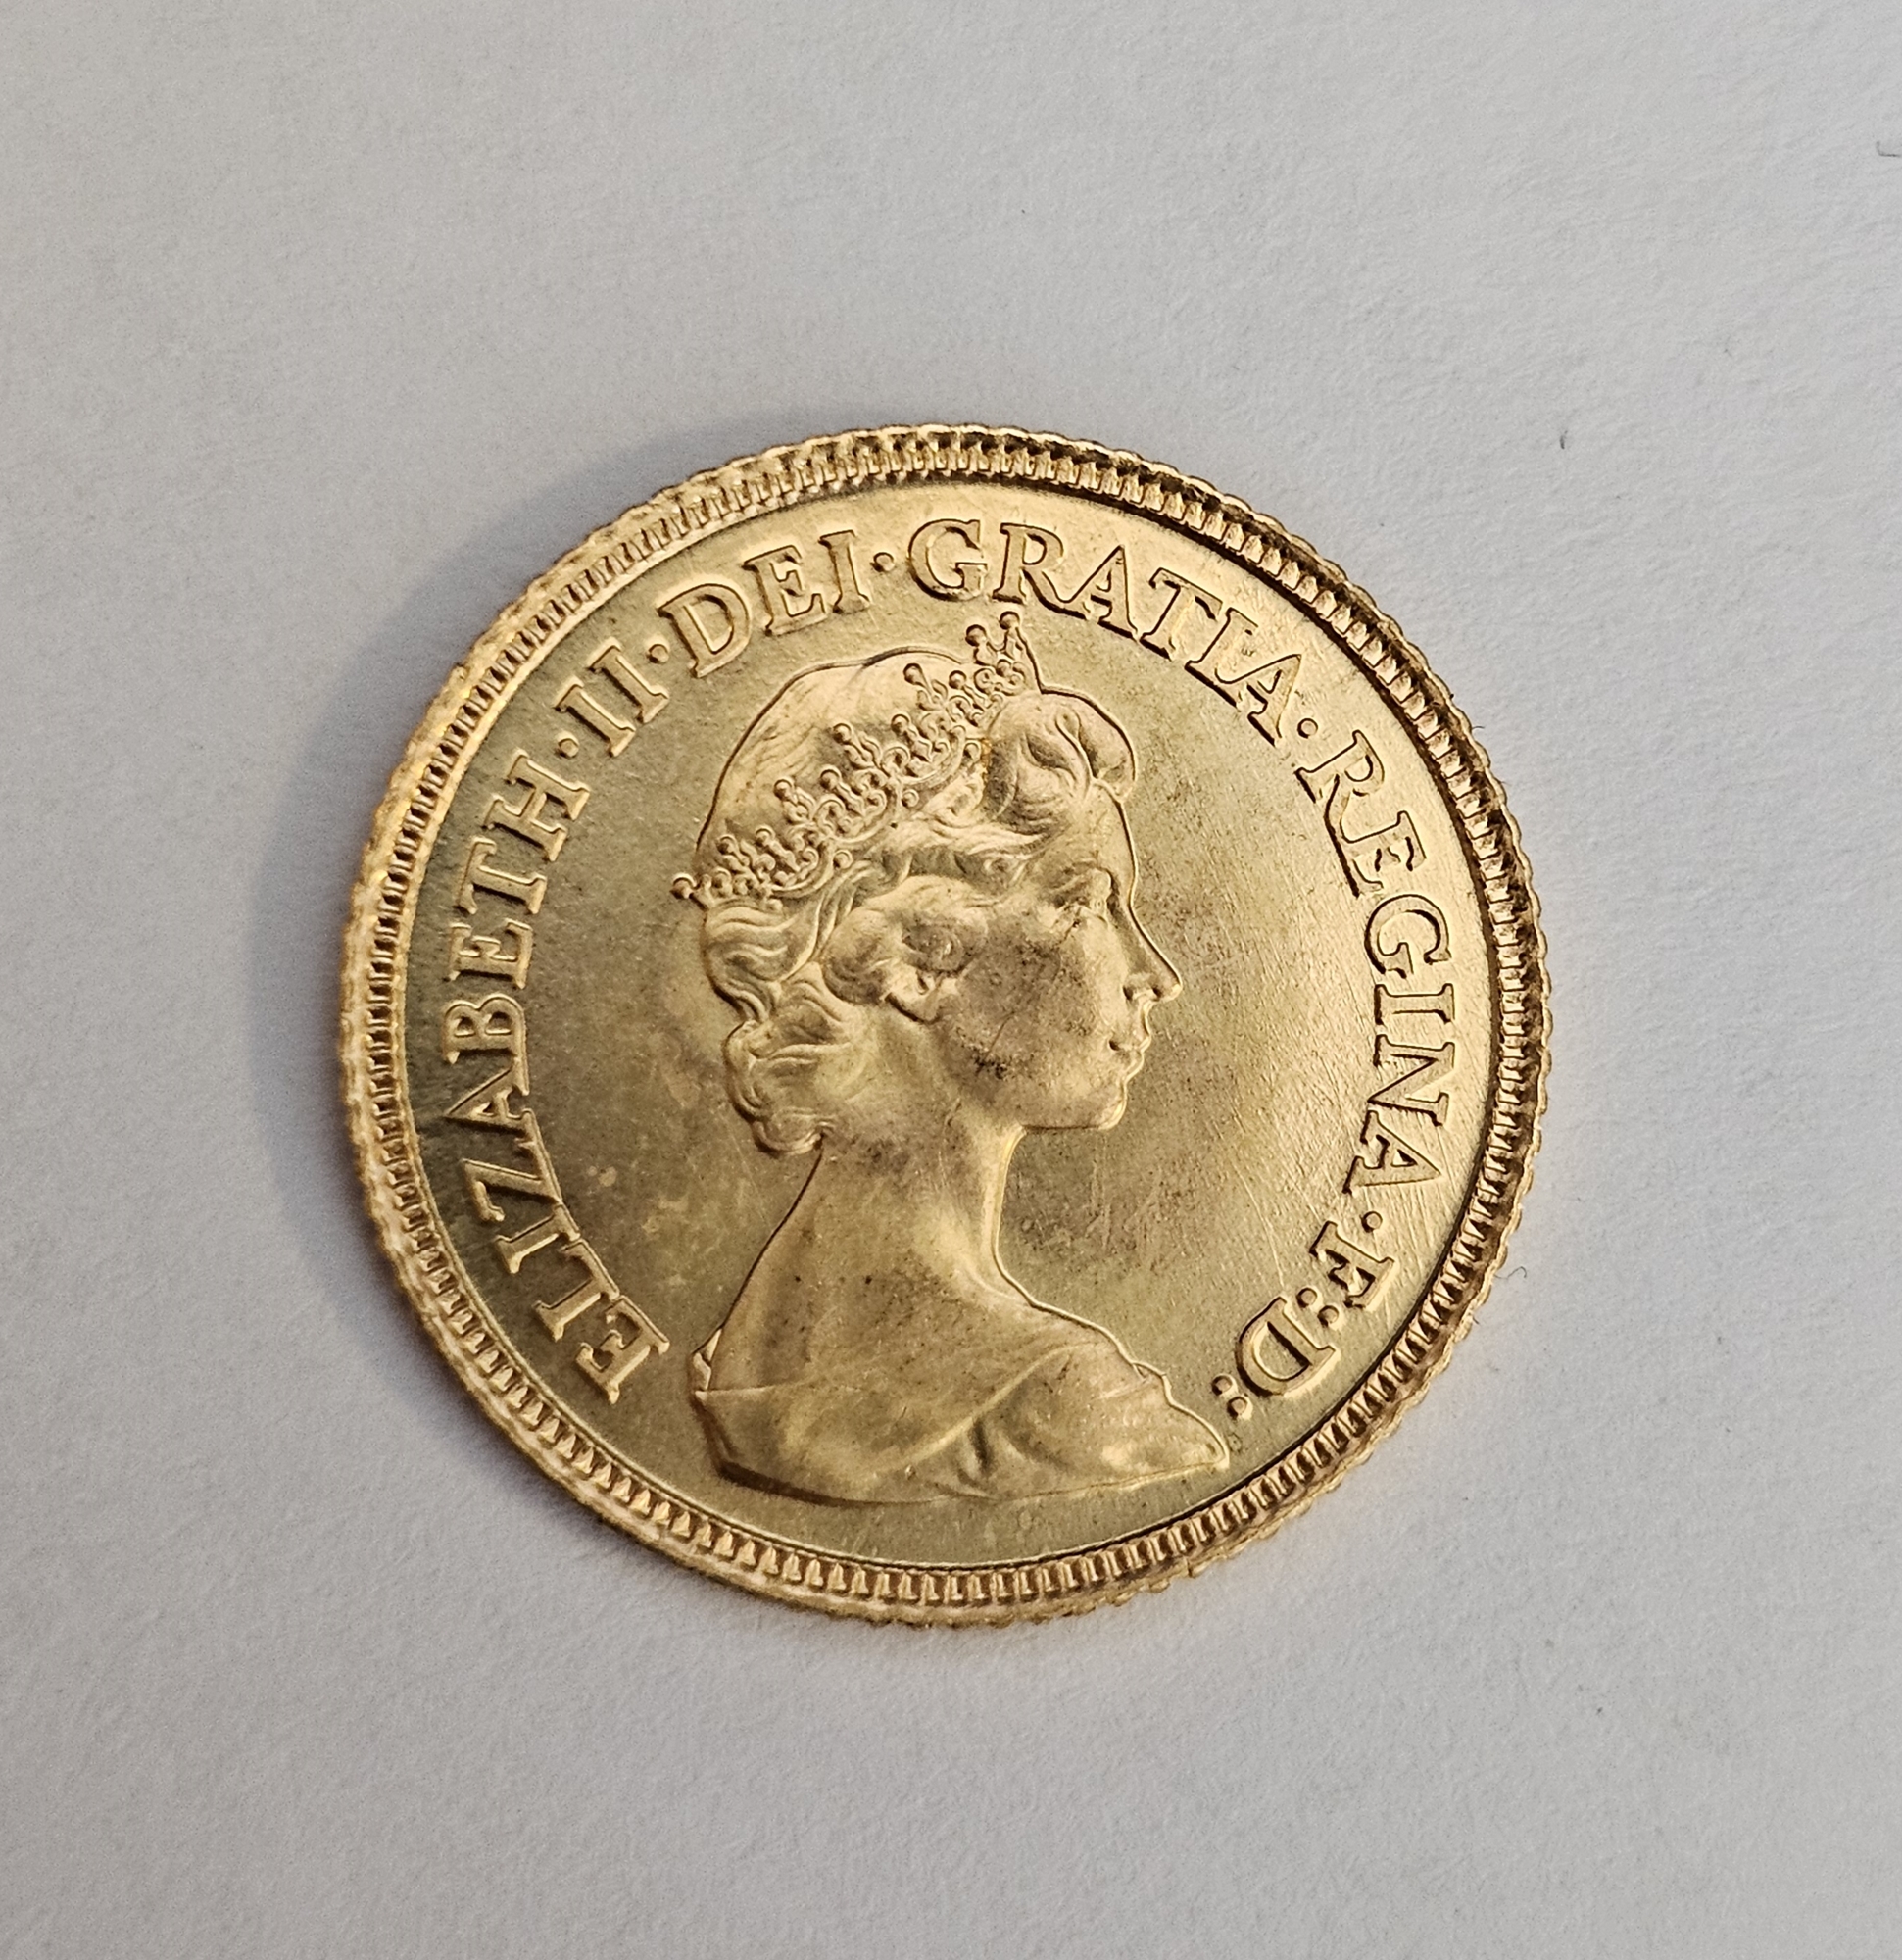 Elizabeth II half sovereign 1982 - Image 2 of 2